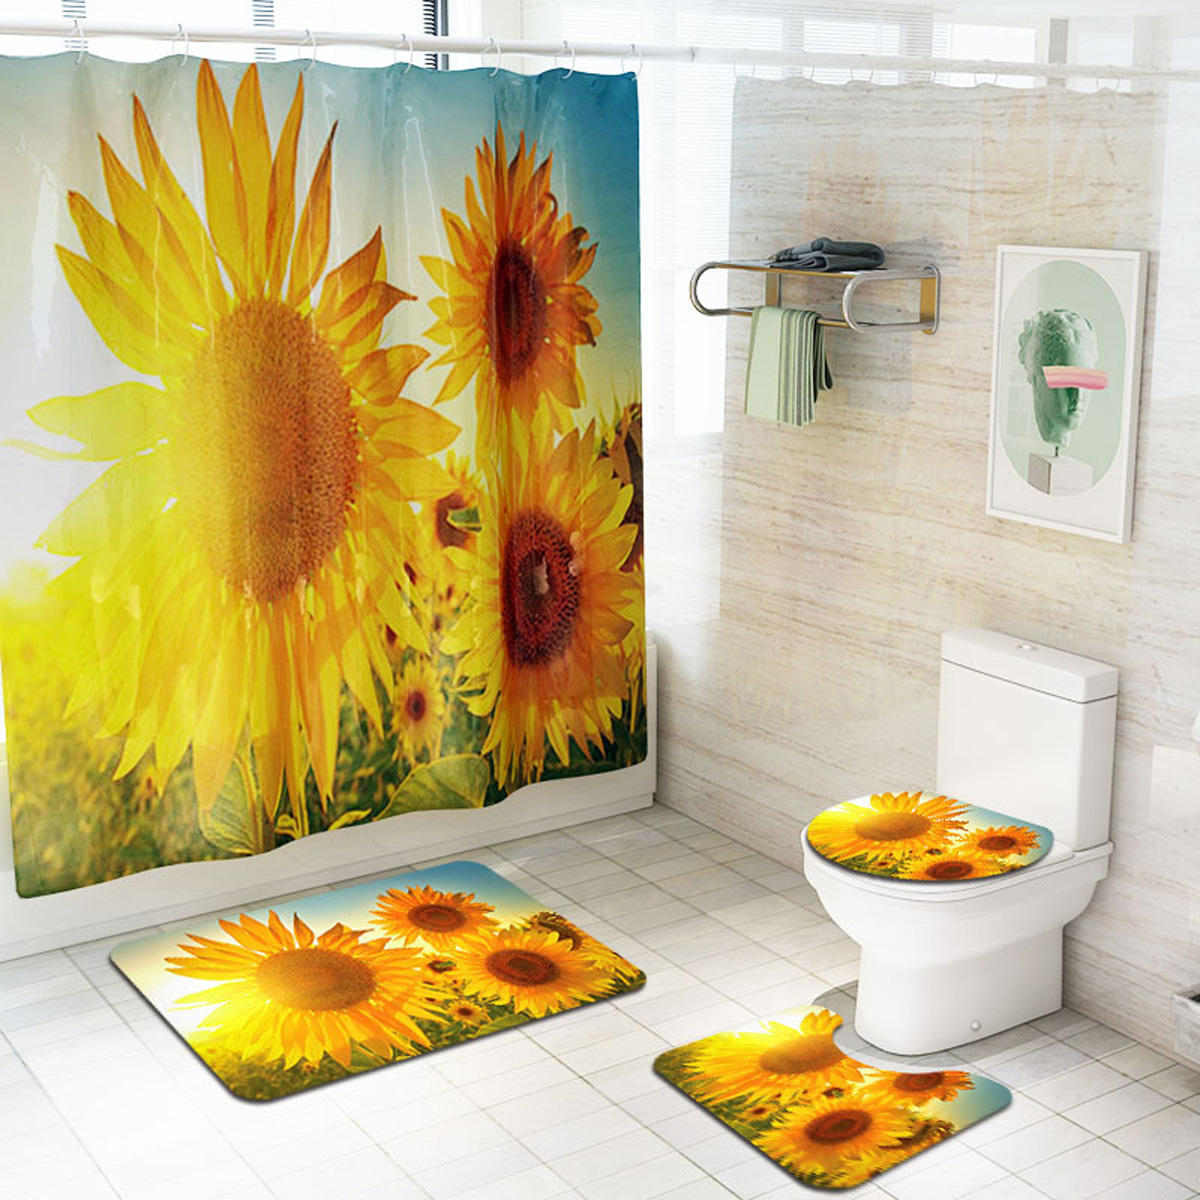 

Waterproof Shower Curtain Bathroom Toilet Lid Seat Cover Bath Mats Sunflower Summer Feeling Home Decor